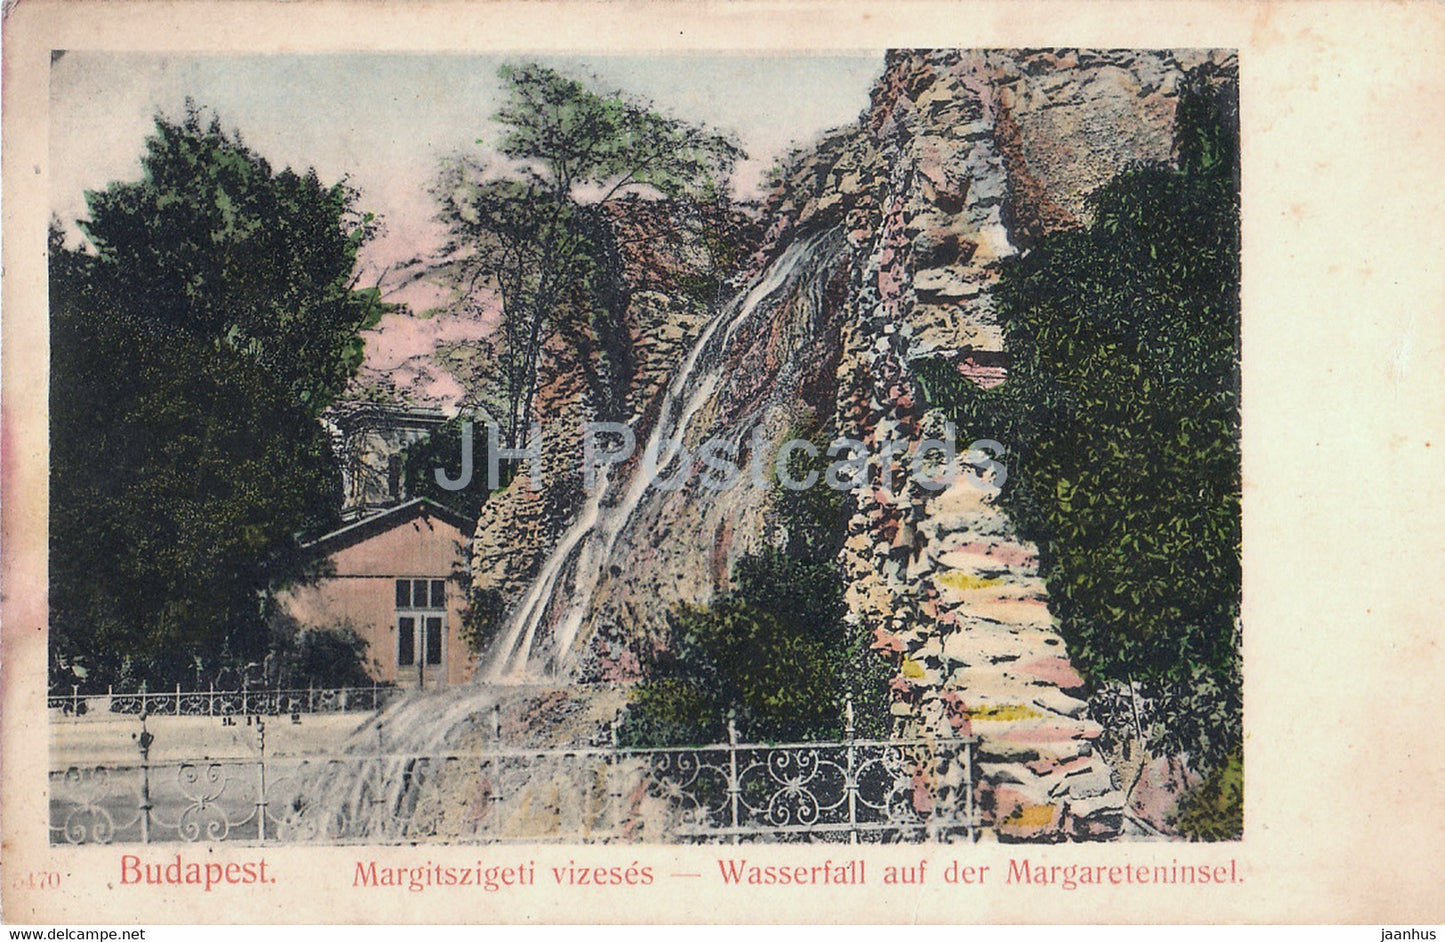 Budapest - Margitszigeti vizeses - Wasserfall auf der Margareteninsel - old postcard - Hungary - used - JH Postcards